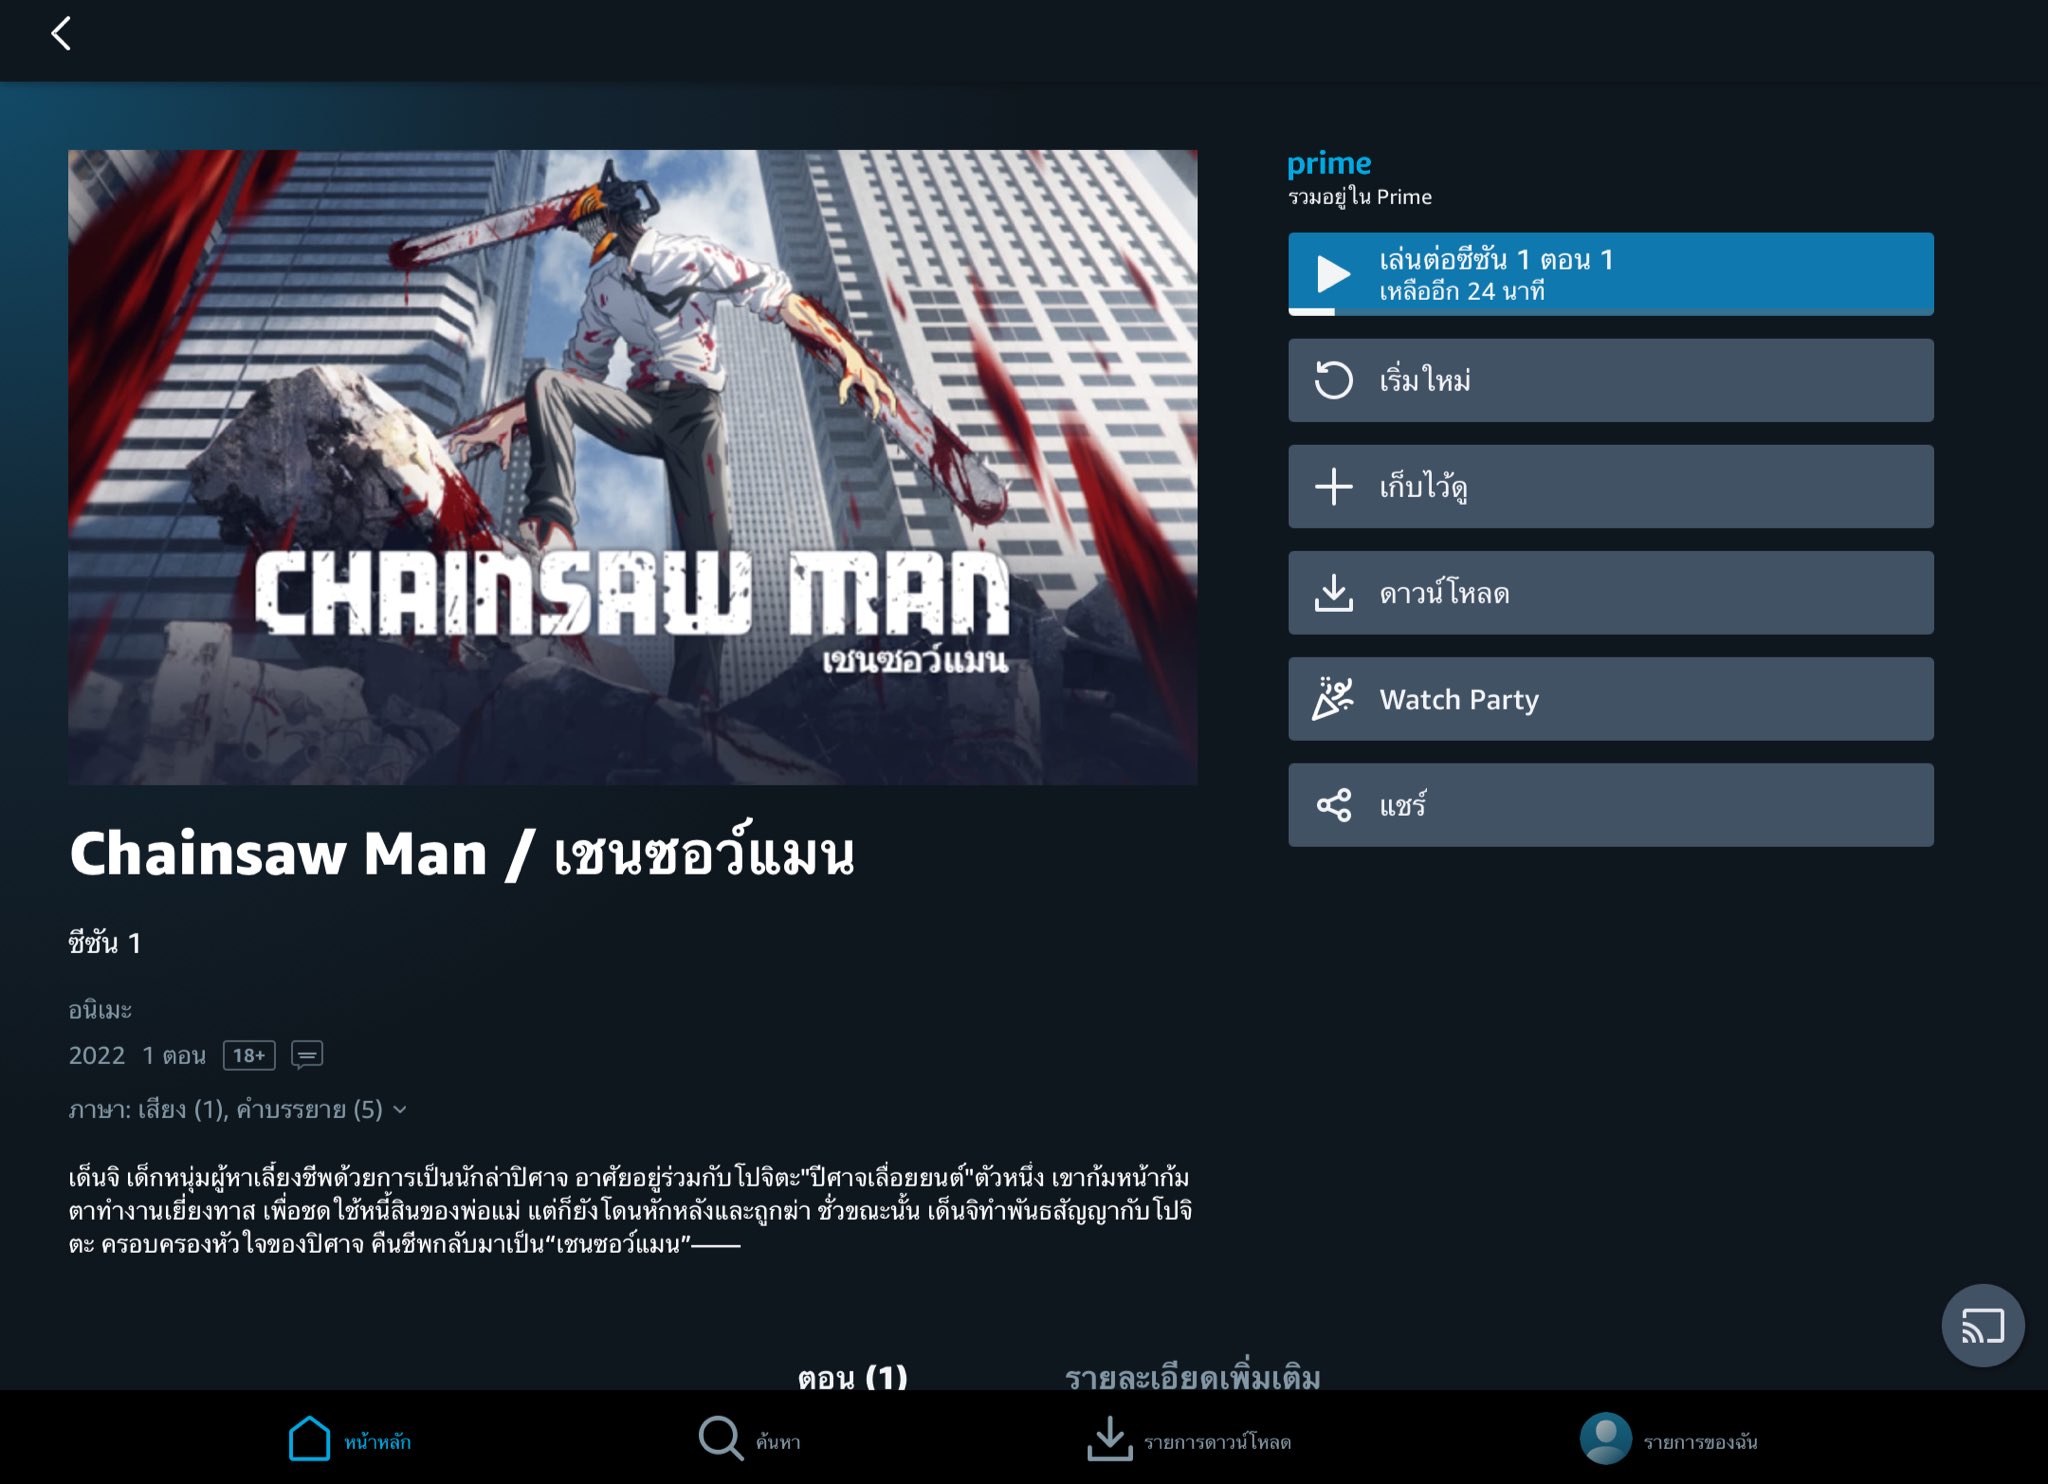 Chainsaw Man - Prime Video